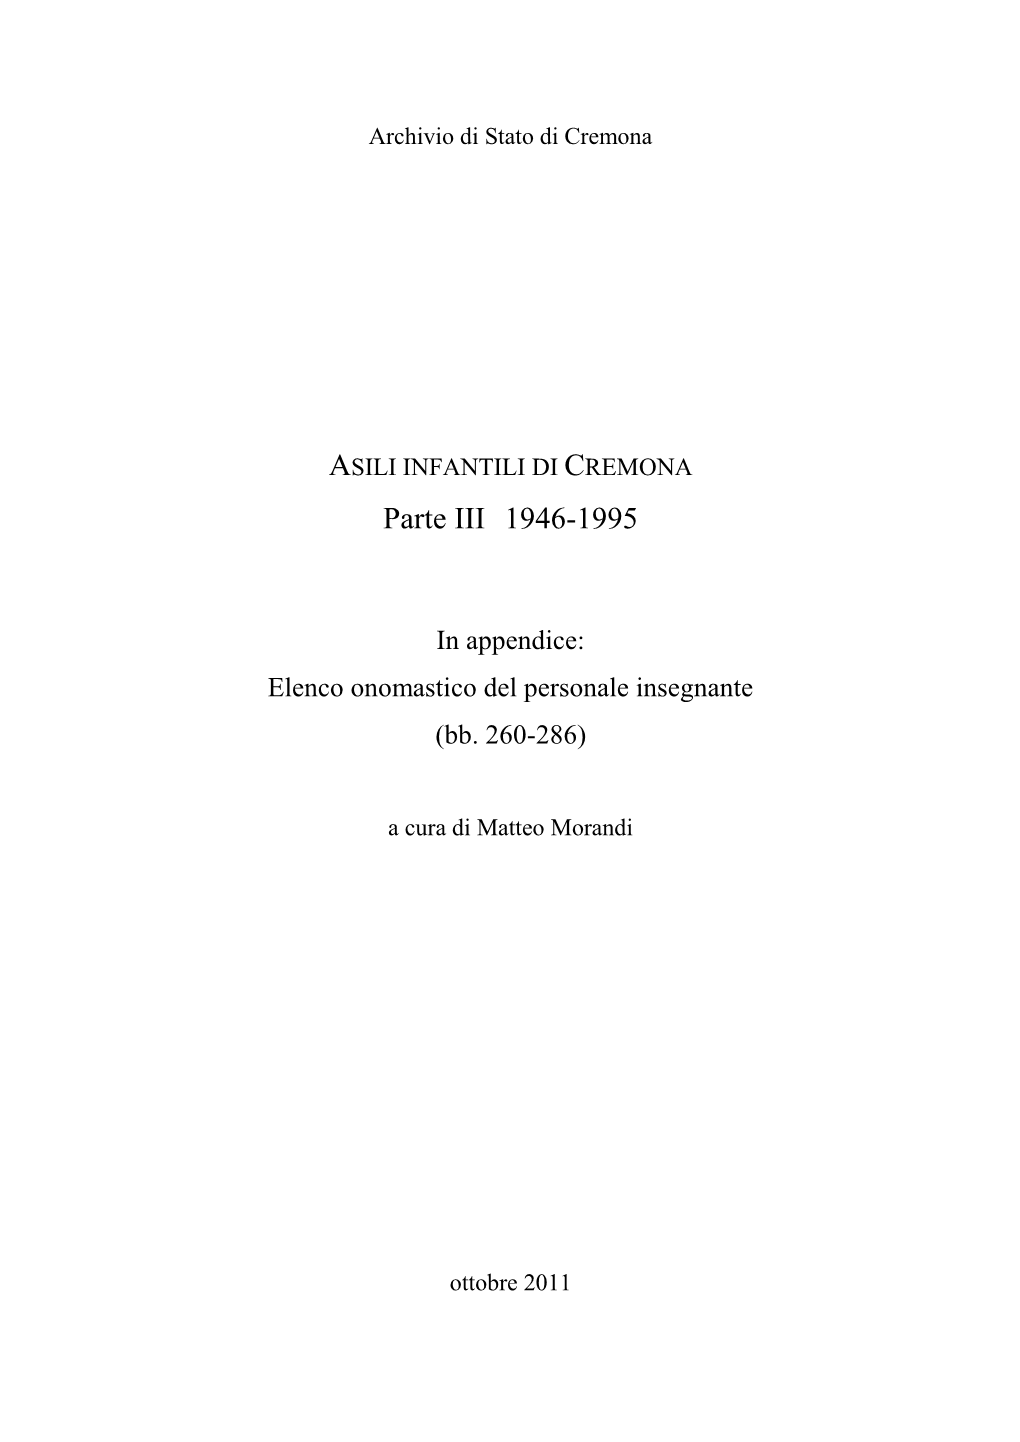 ASILI INFANTILI DI CREMONA Parte III 1946-1995